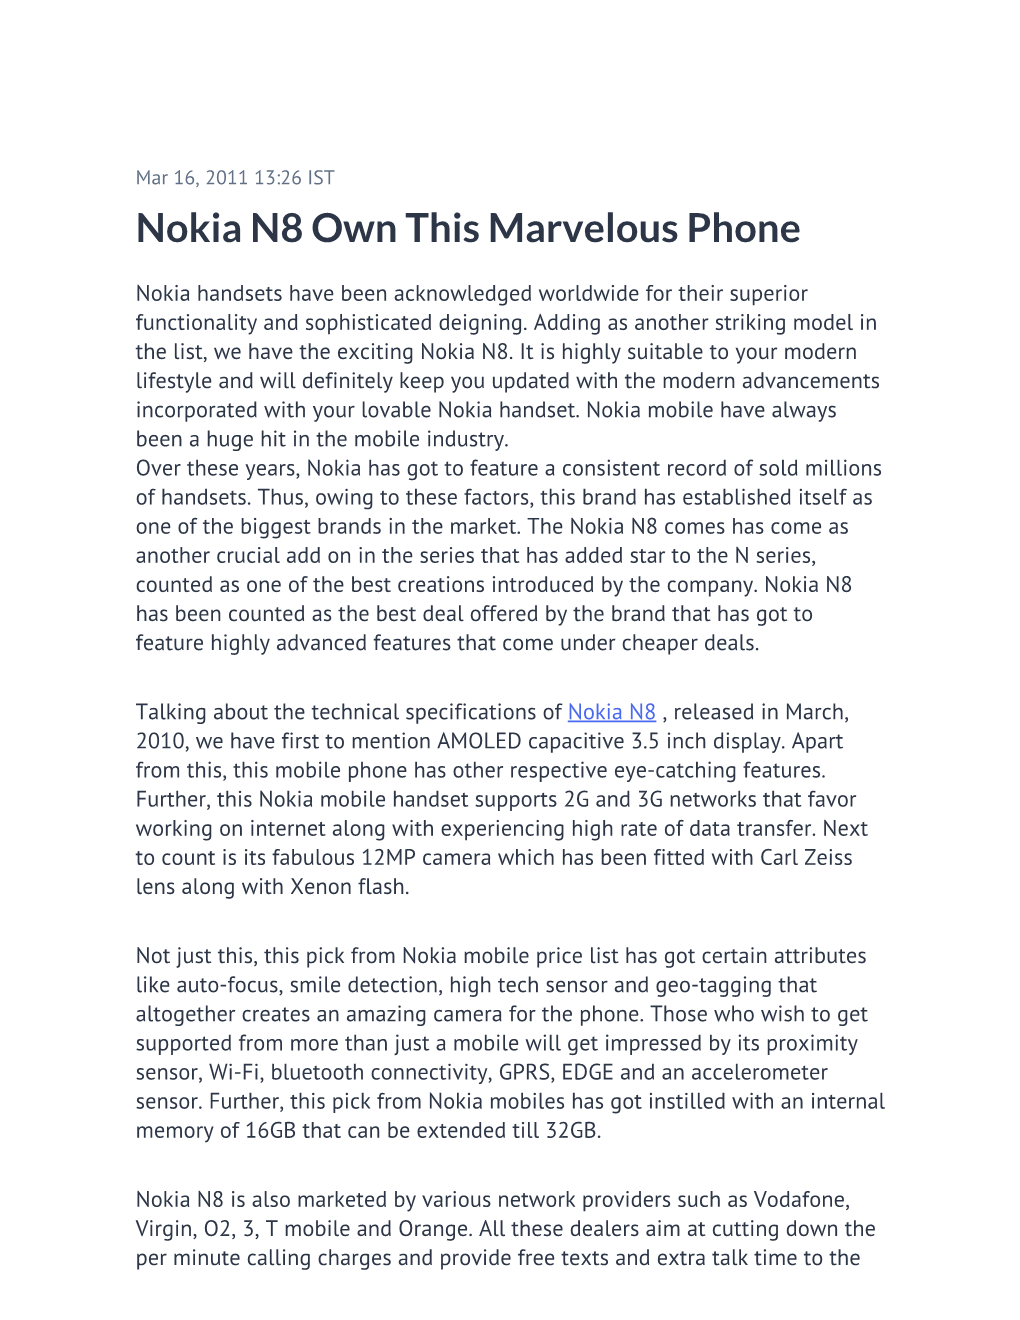 Nokia N8 Own This Marvelous Phone